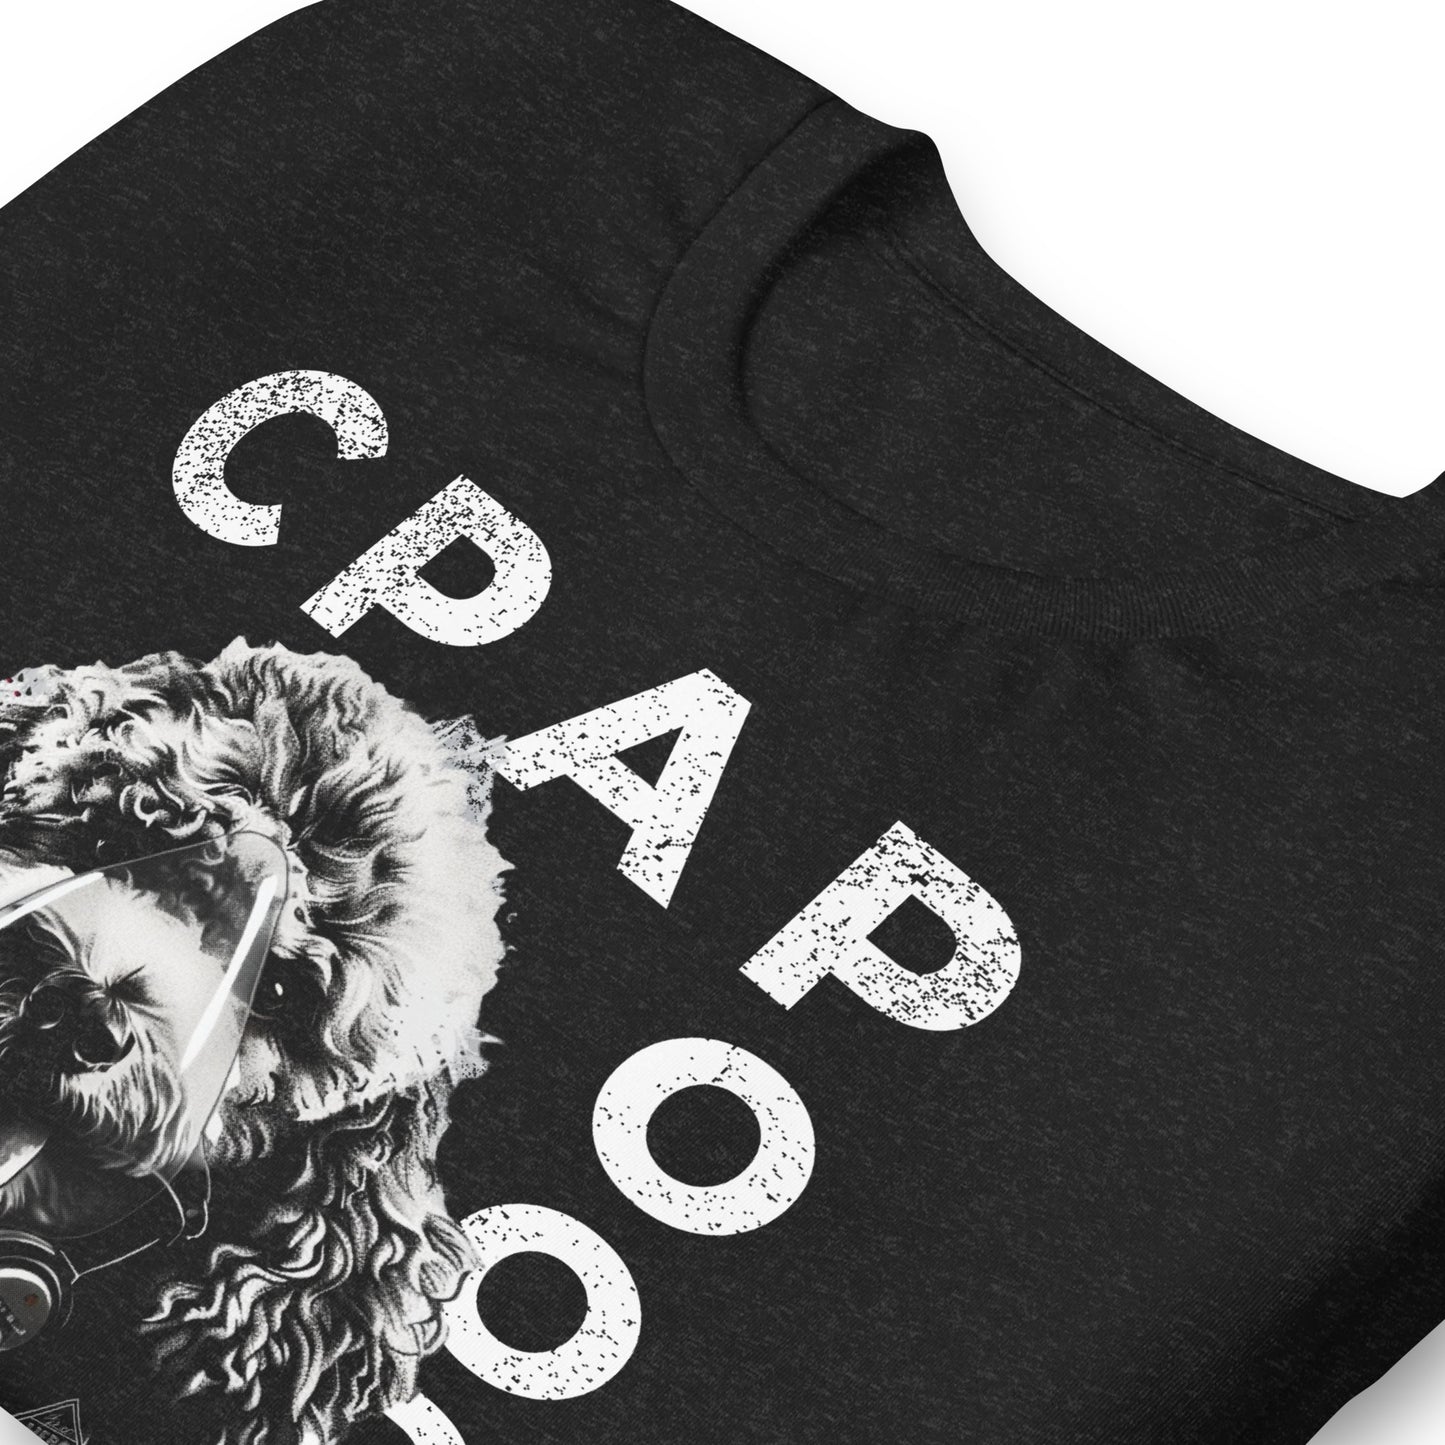 CPAPoodle, Poodle Wearing CPAP, CPAP, Animals, Sleep Apnea, Graphic Tee Shirt, Black